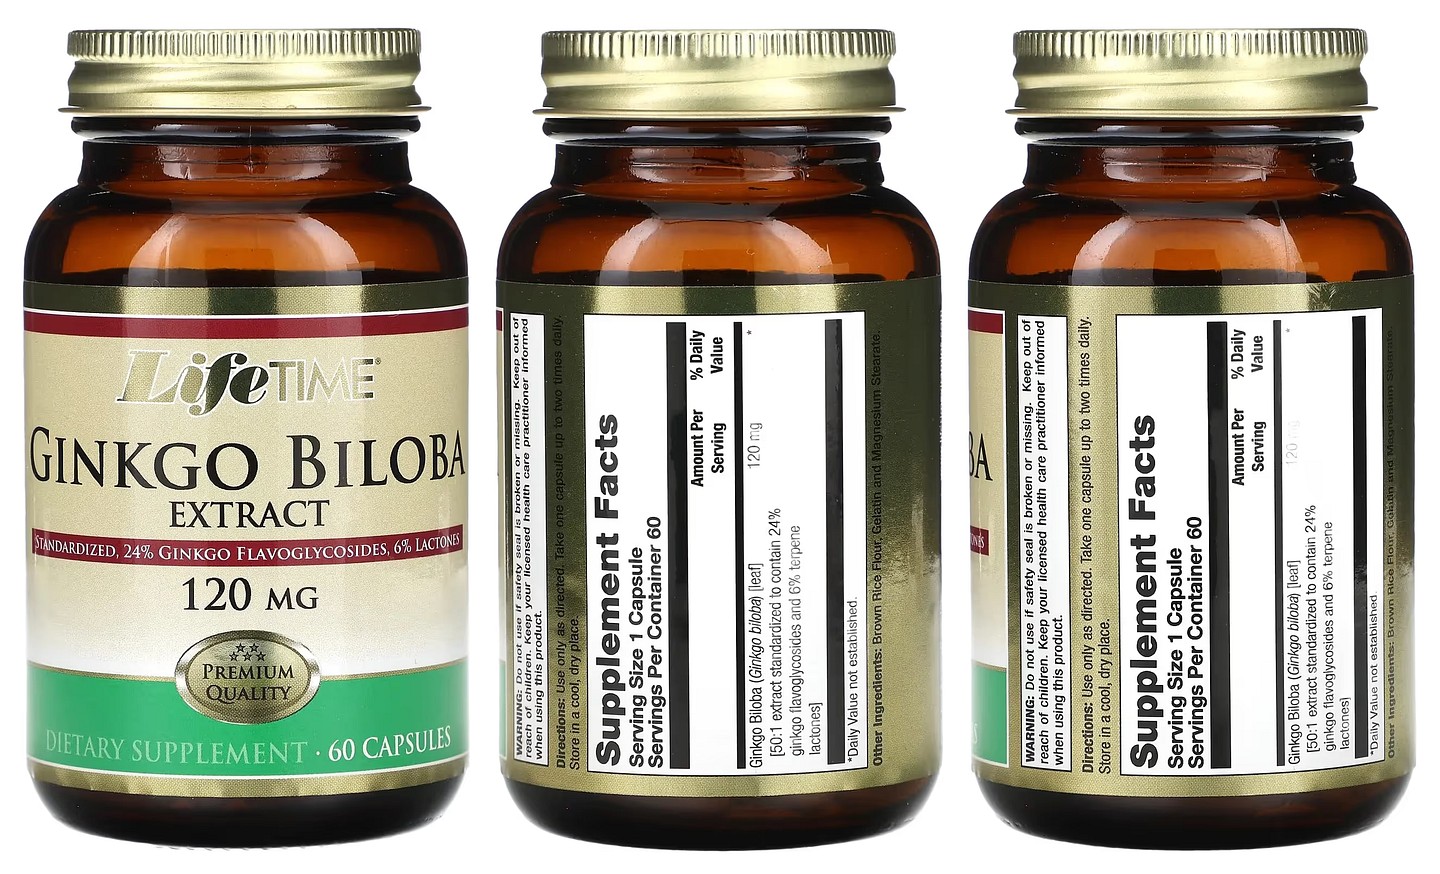 LifeTime Vitamins, Ginkgo Biloba Extract packaging